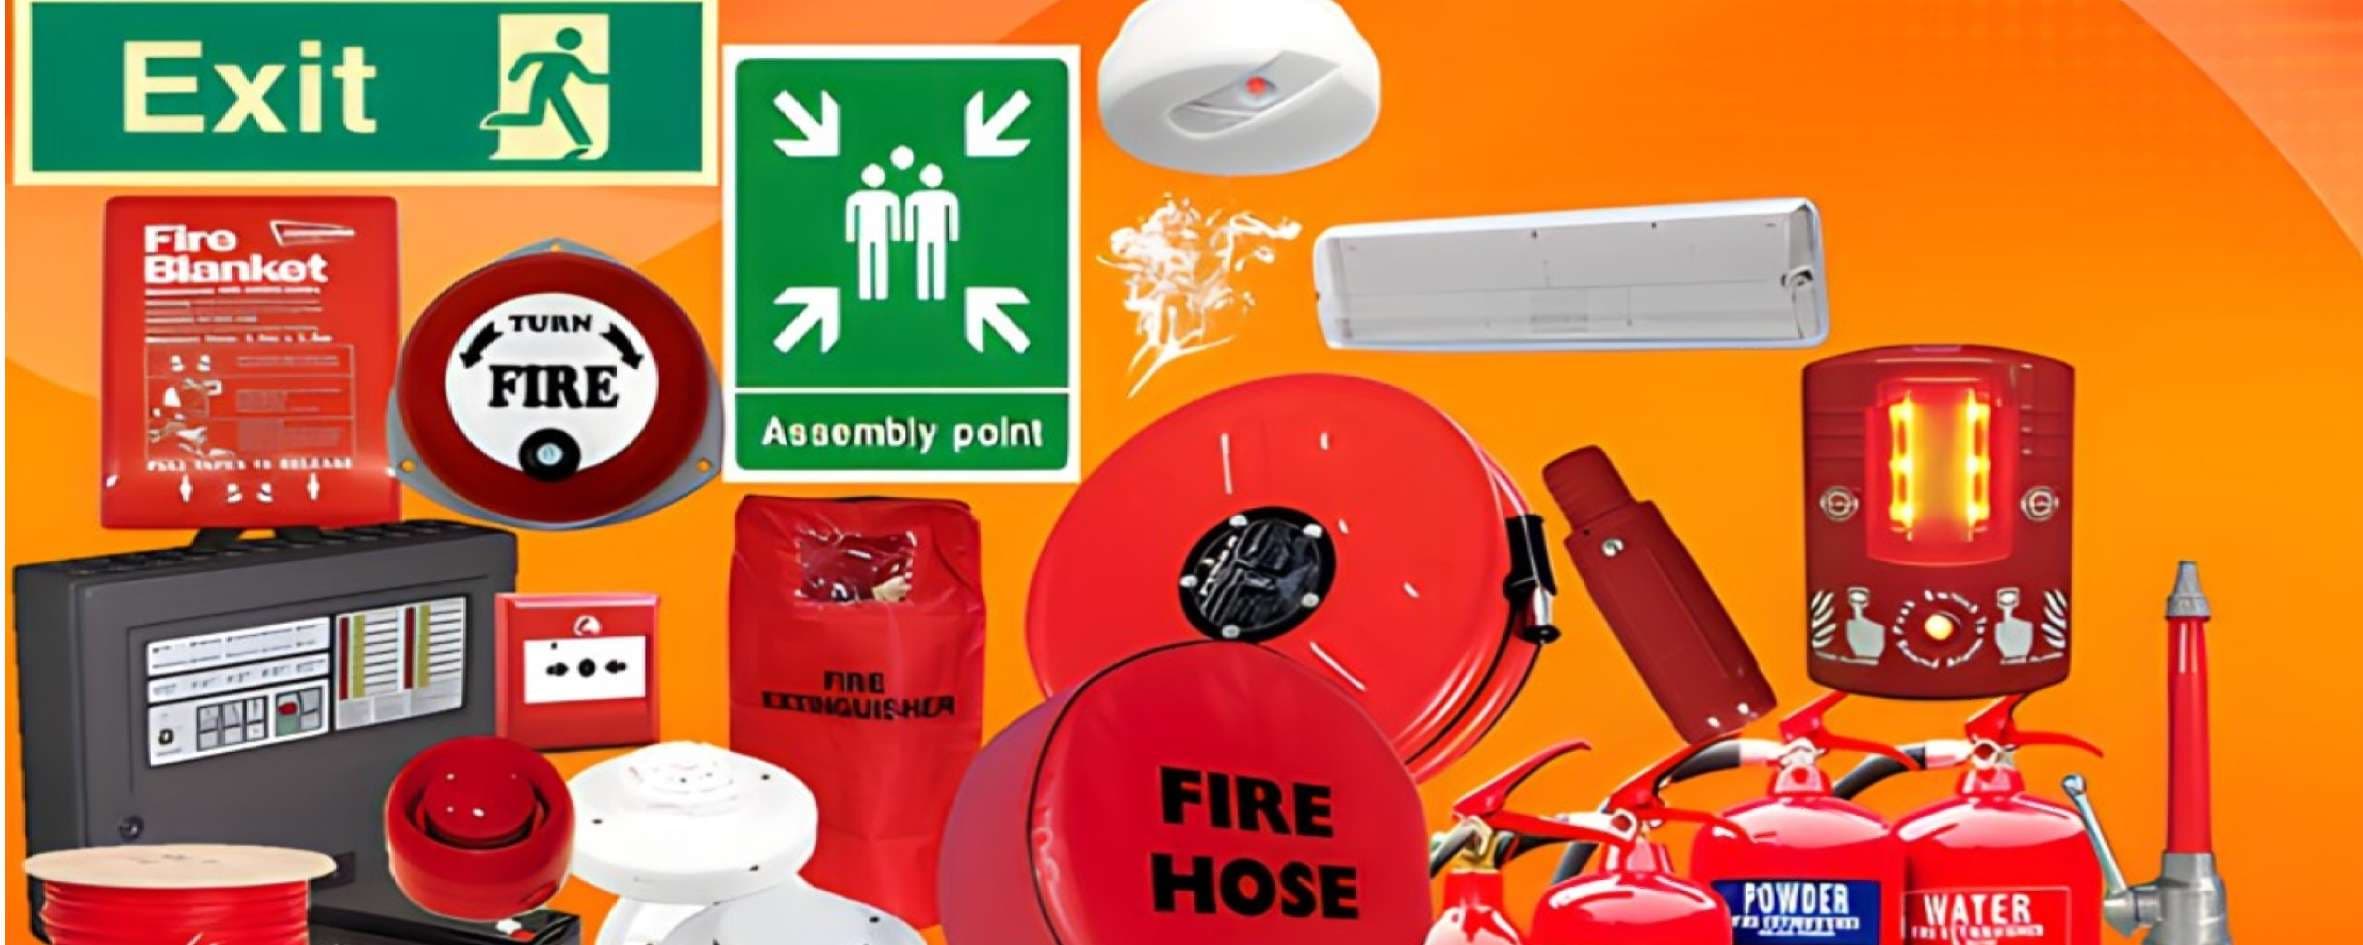 Robert's Fire Prevention Services & Supplies